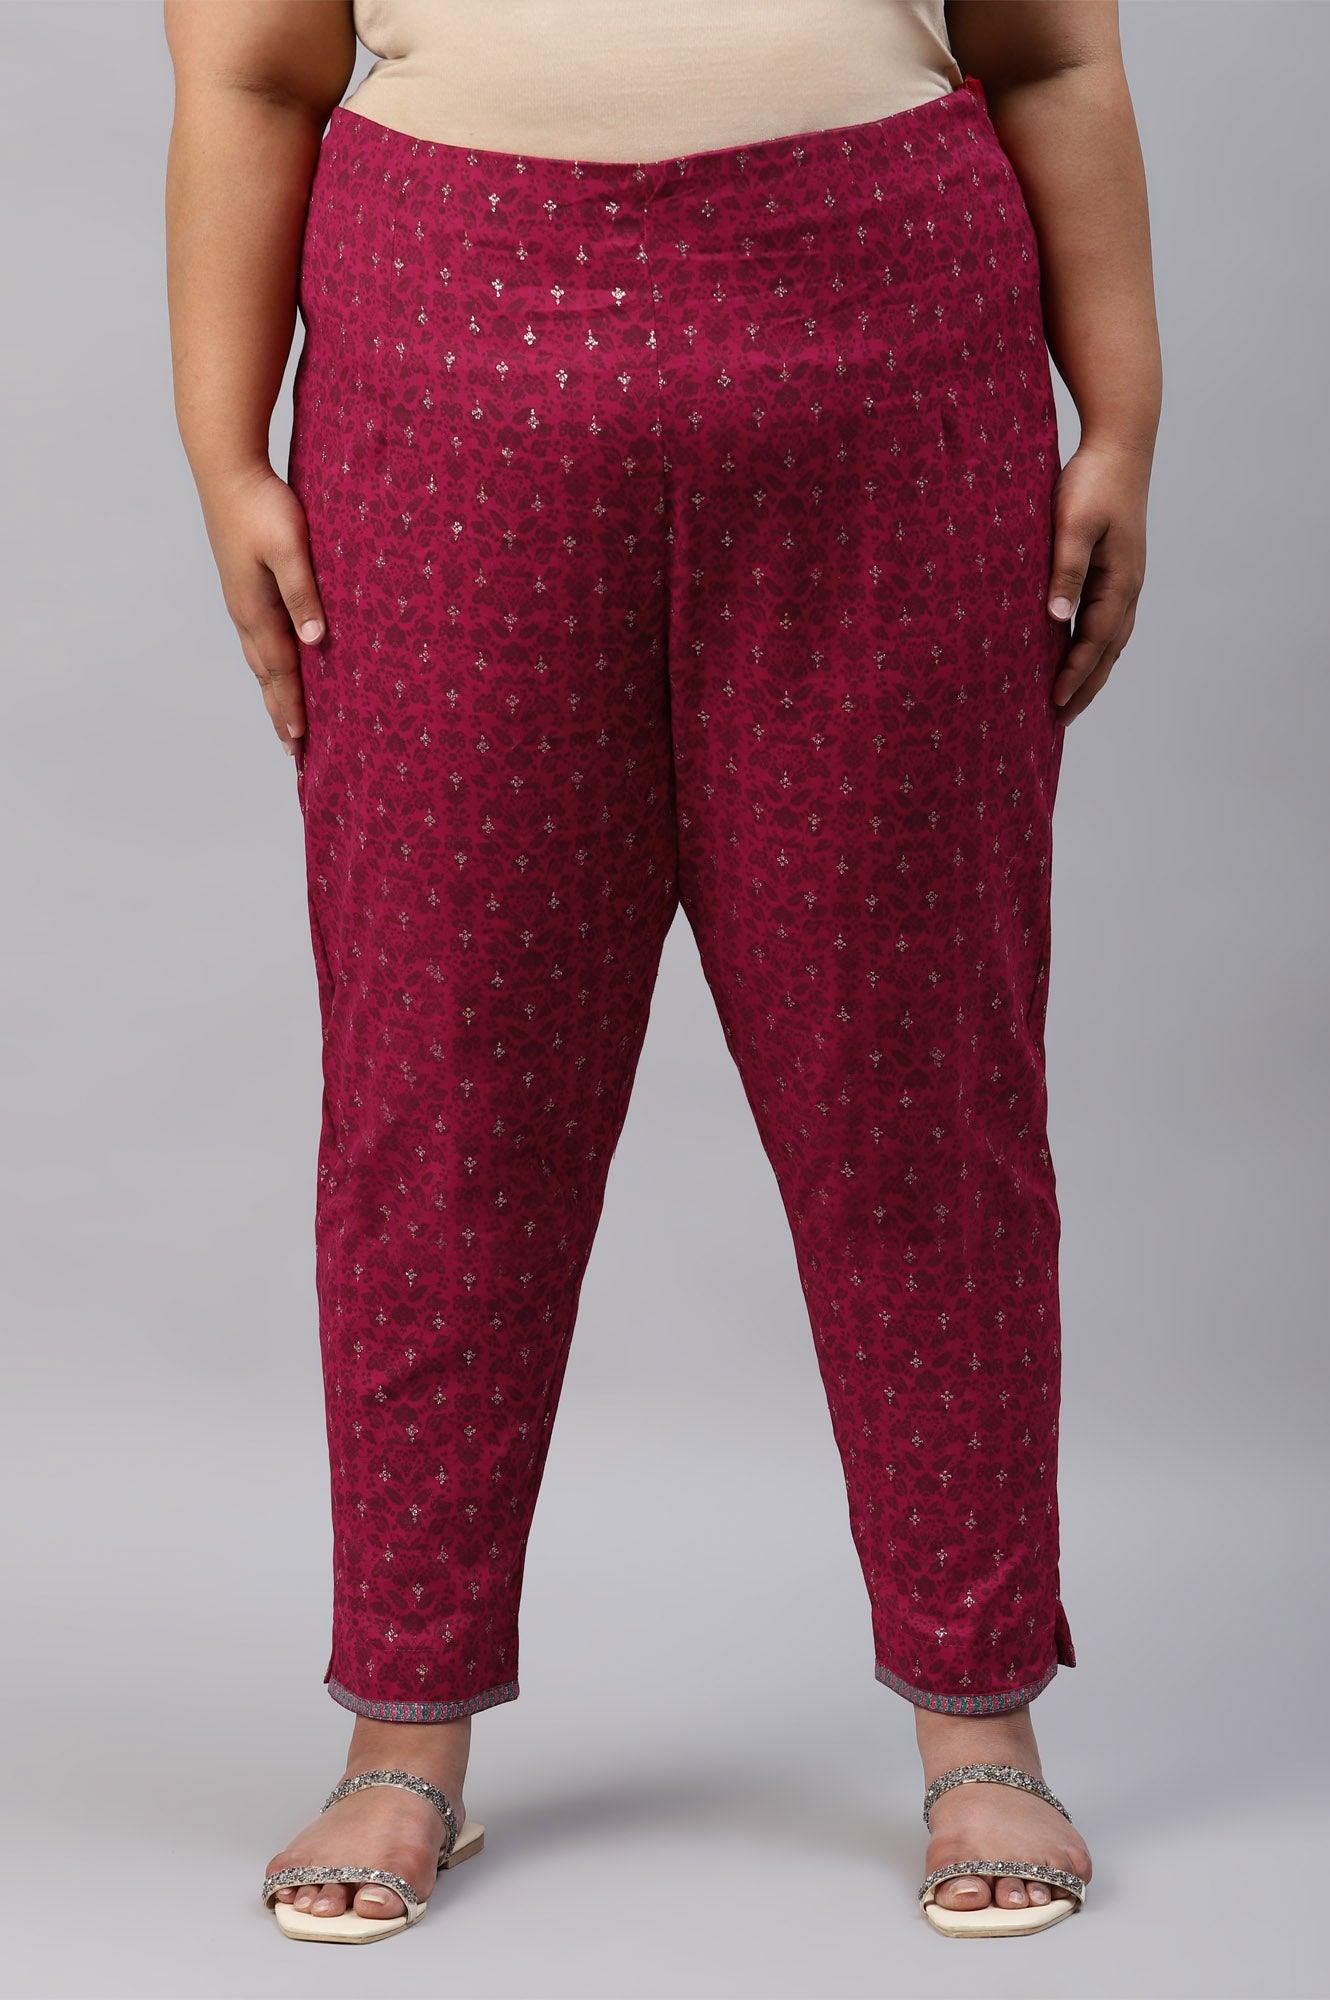 Plus Size Fuchsia Pink Floral Printed Slim Pants - wforwoman